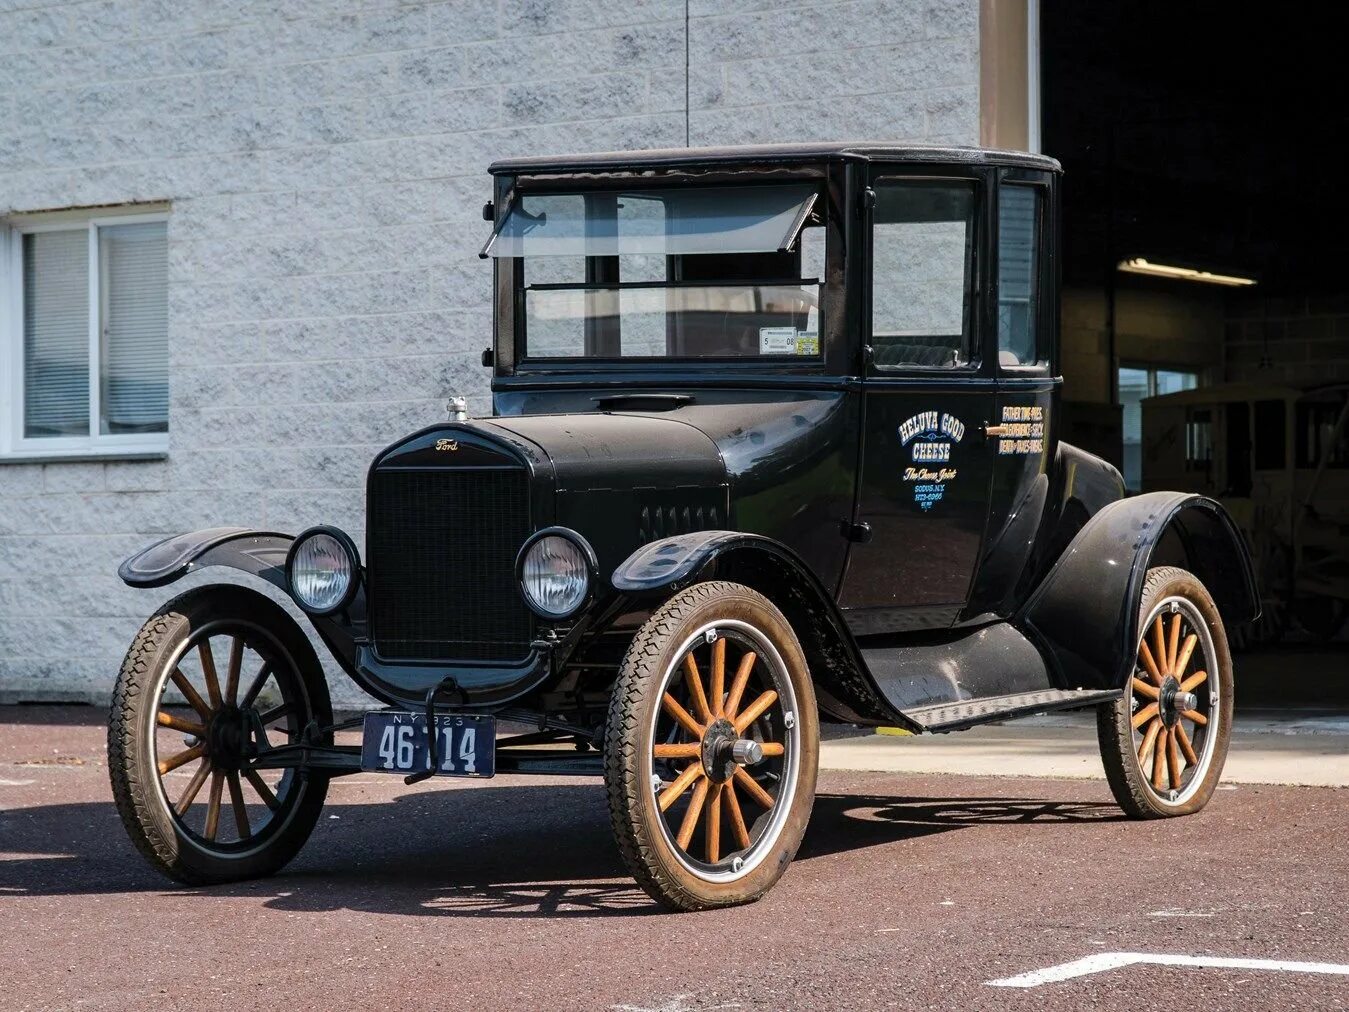 Модель форда. Ford t 1923. 1923 Ford model t Coupe. Ford model t. Ford model t 1923 sedan.